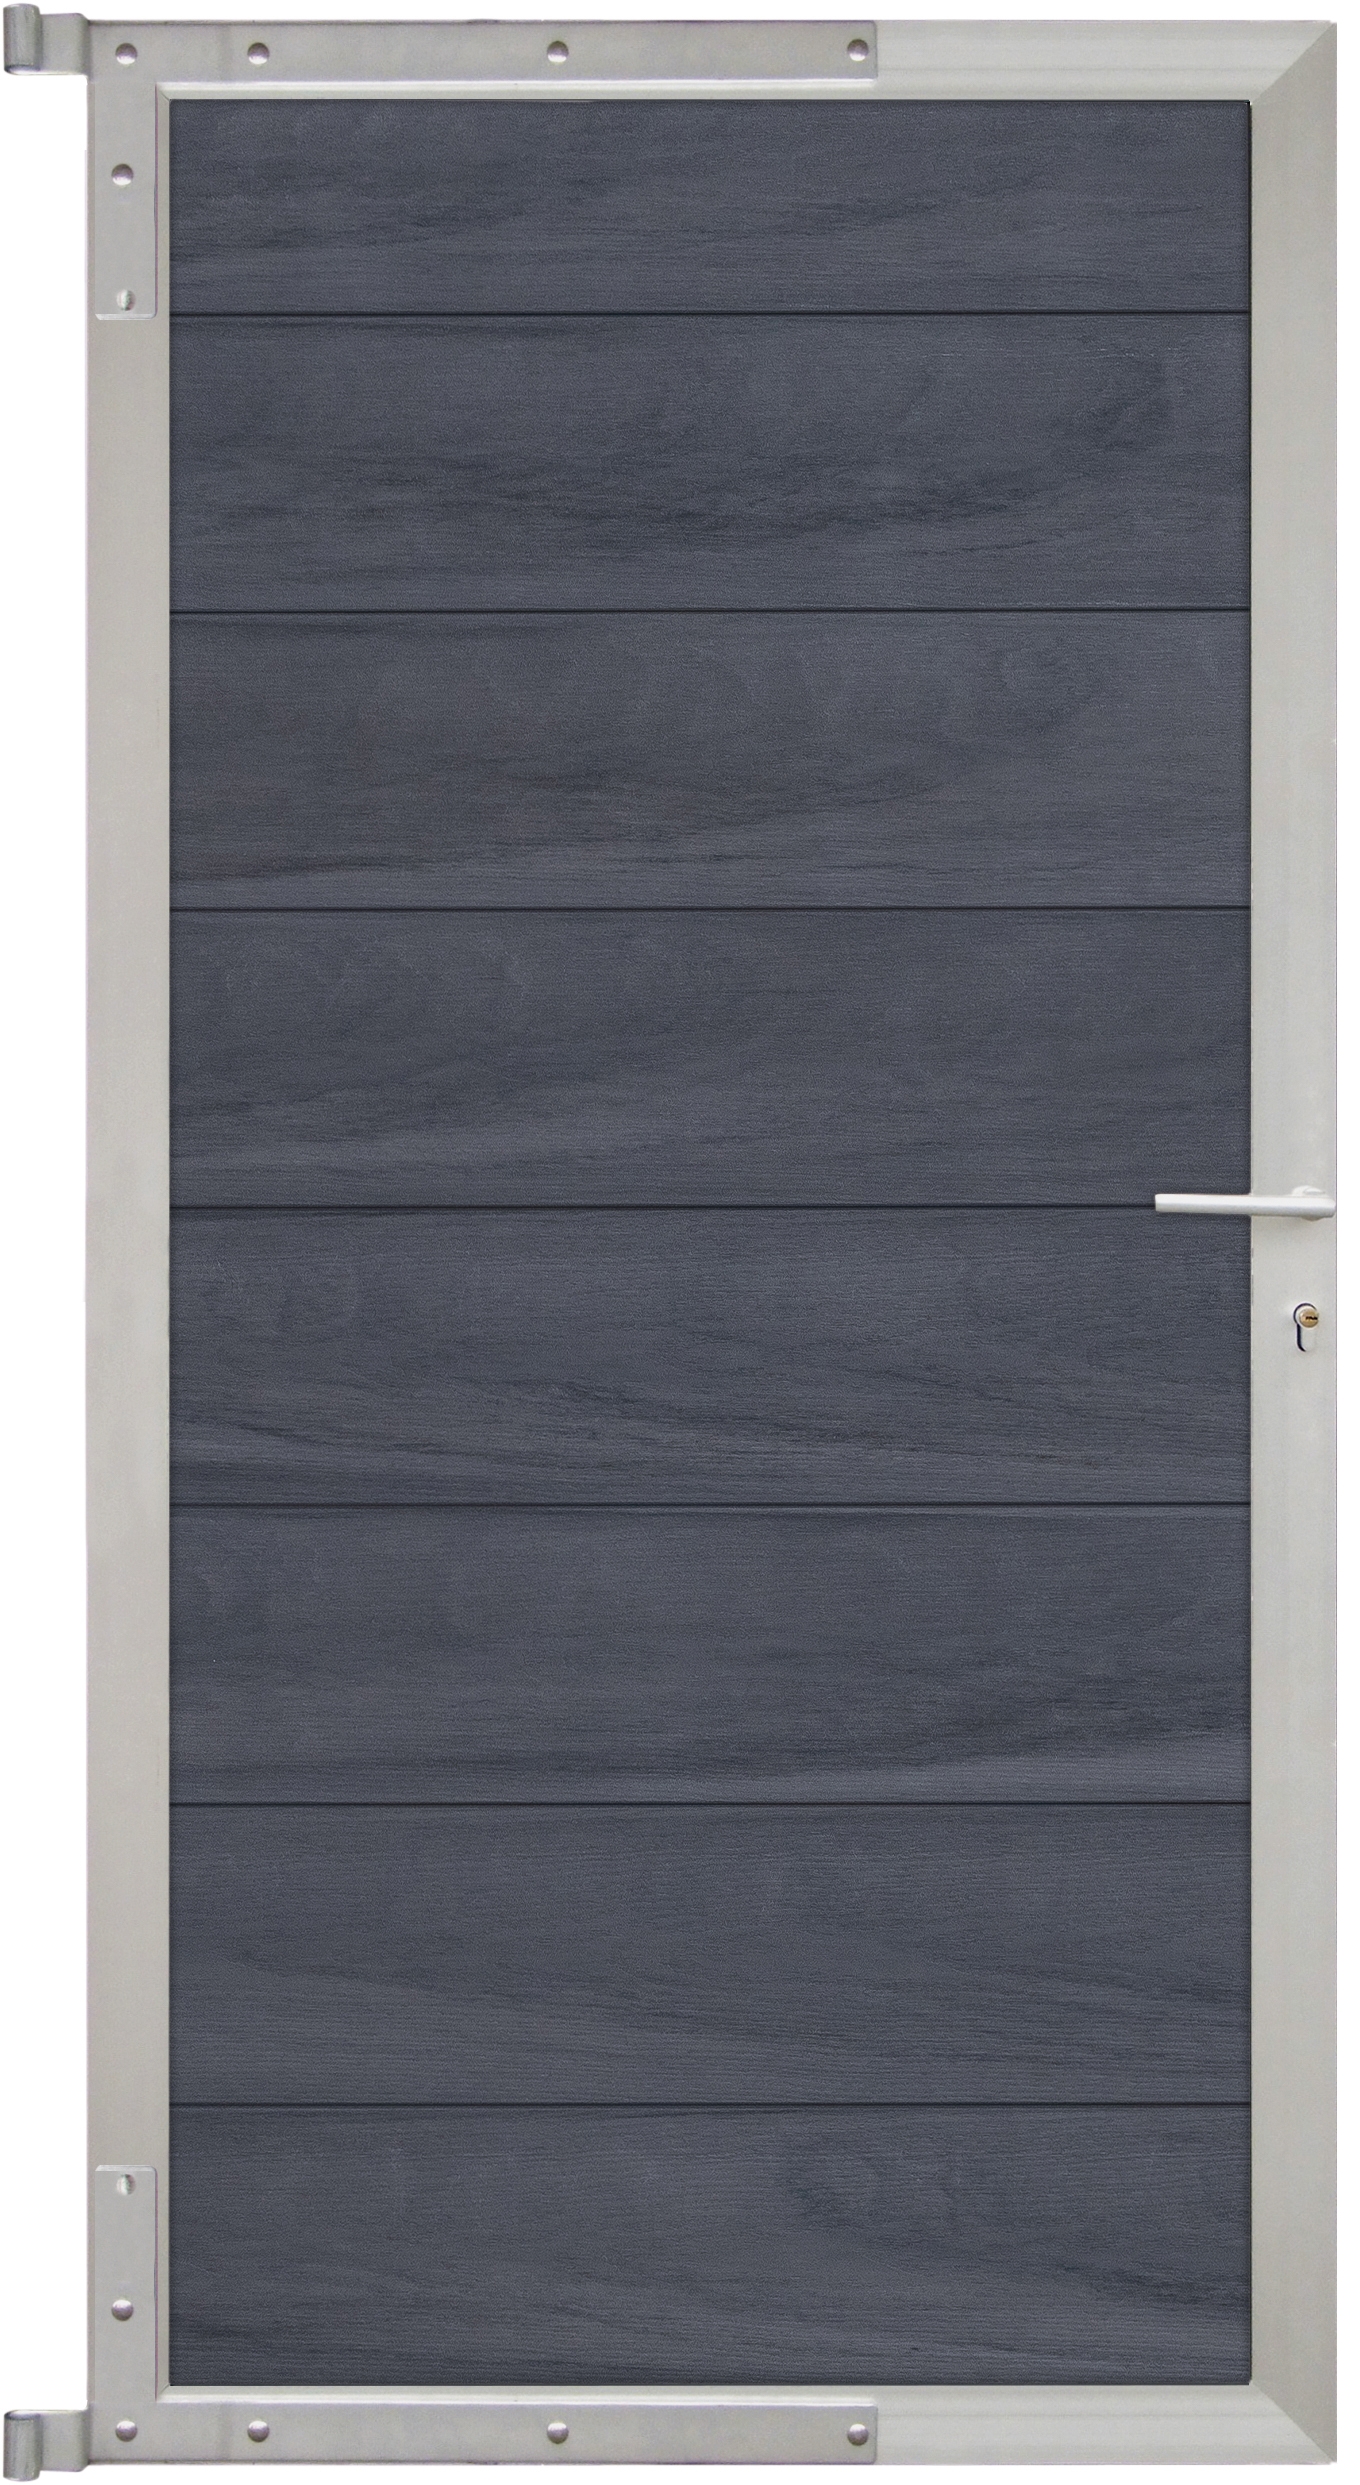 Sylt Zauntor silber/greystone, 90x180 cm, mit Aluminium Rahmen, inkl. Beschlagsatz